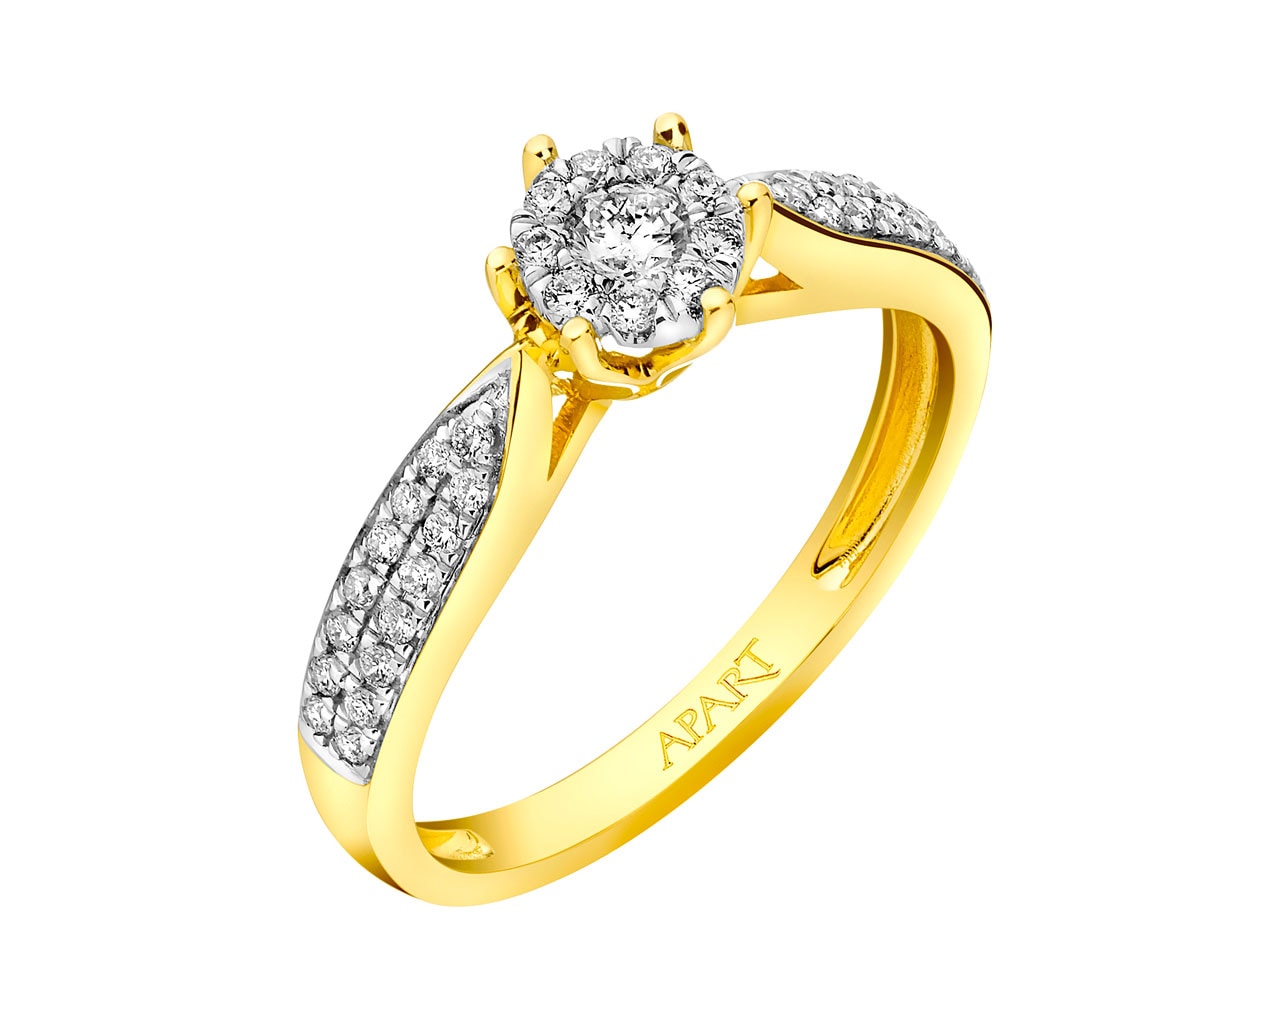 Prsten ze žlutého a bílého zlata s brilianty 0,25 ct - ryzost 750